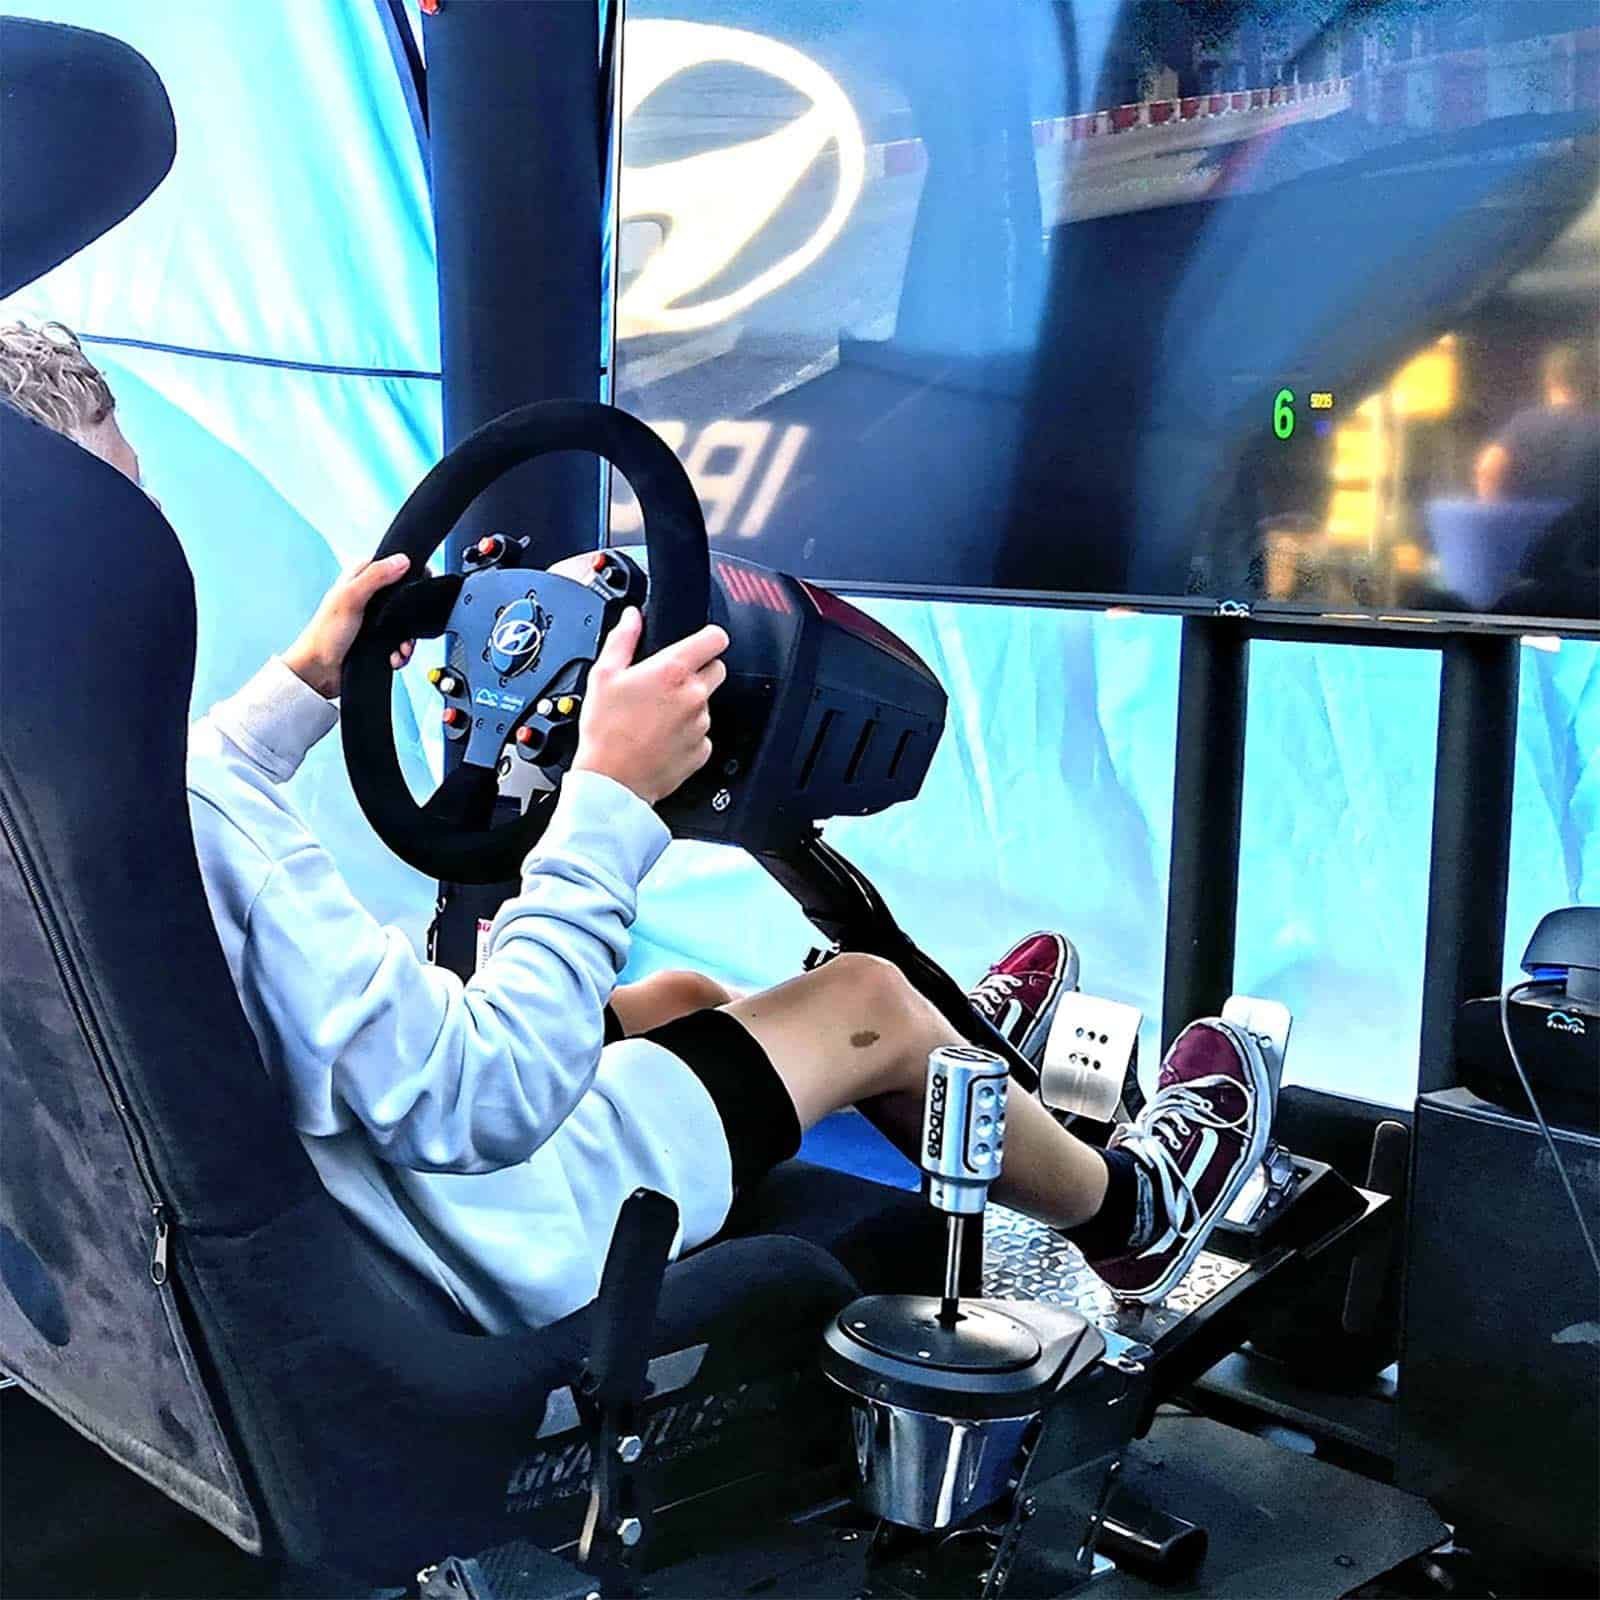 RoarFun Clients Hyundai immersive motion WRC VR rally simulator entertainment on Hyundai Road Show customer days with kids